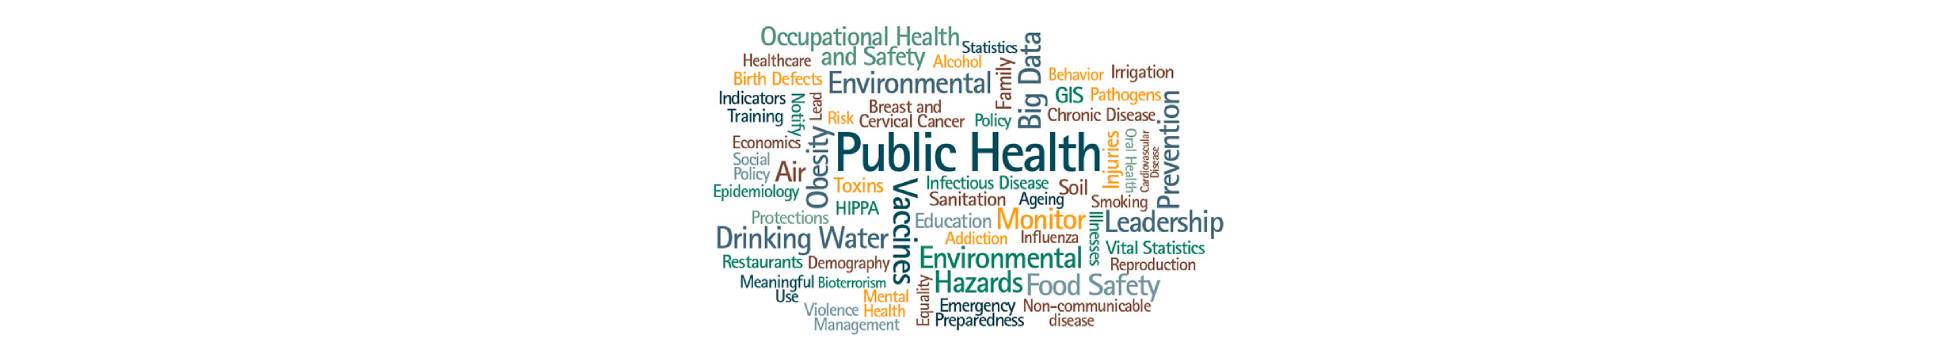 public-health-1.jpg